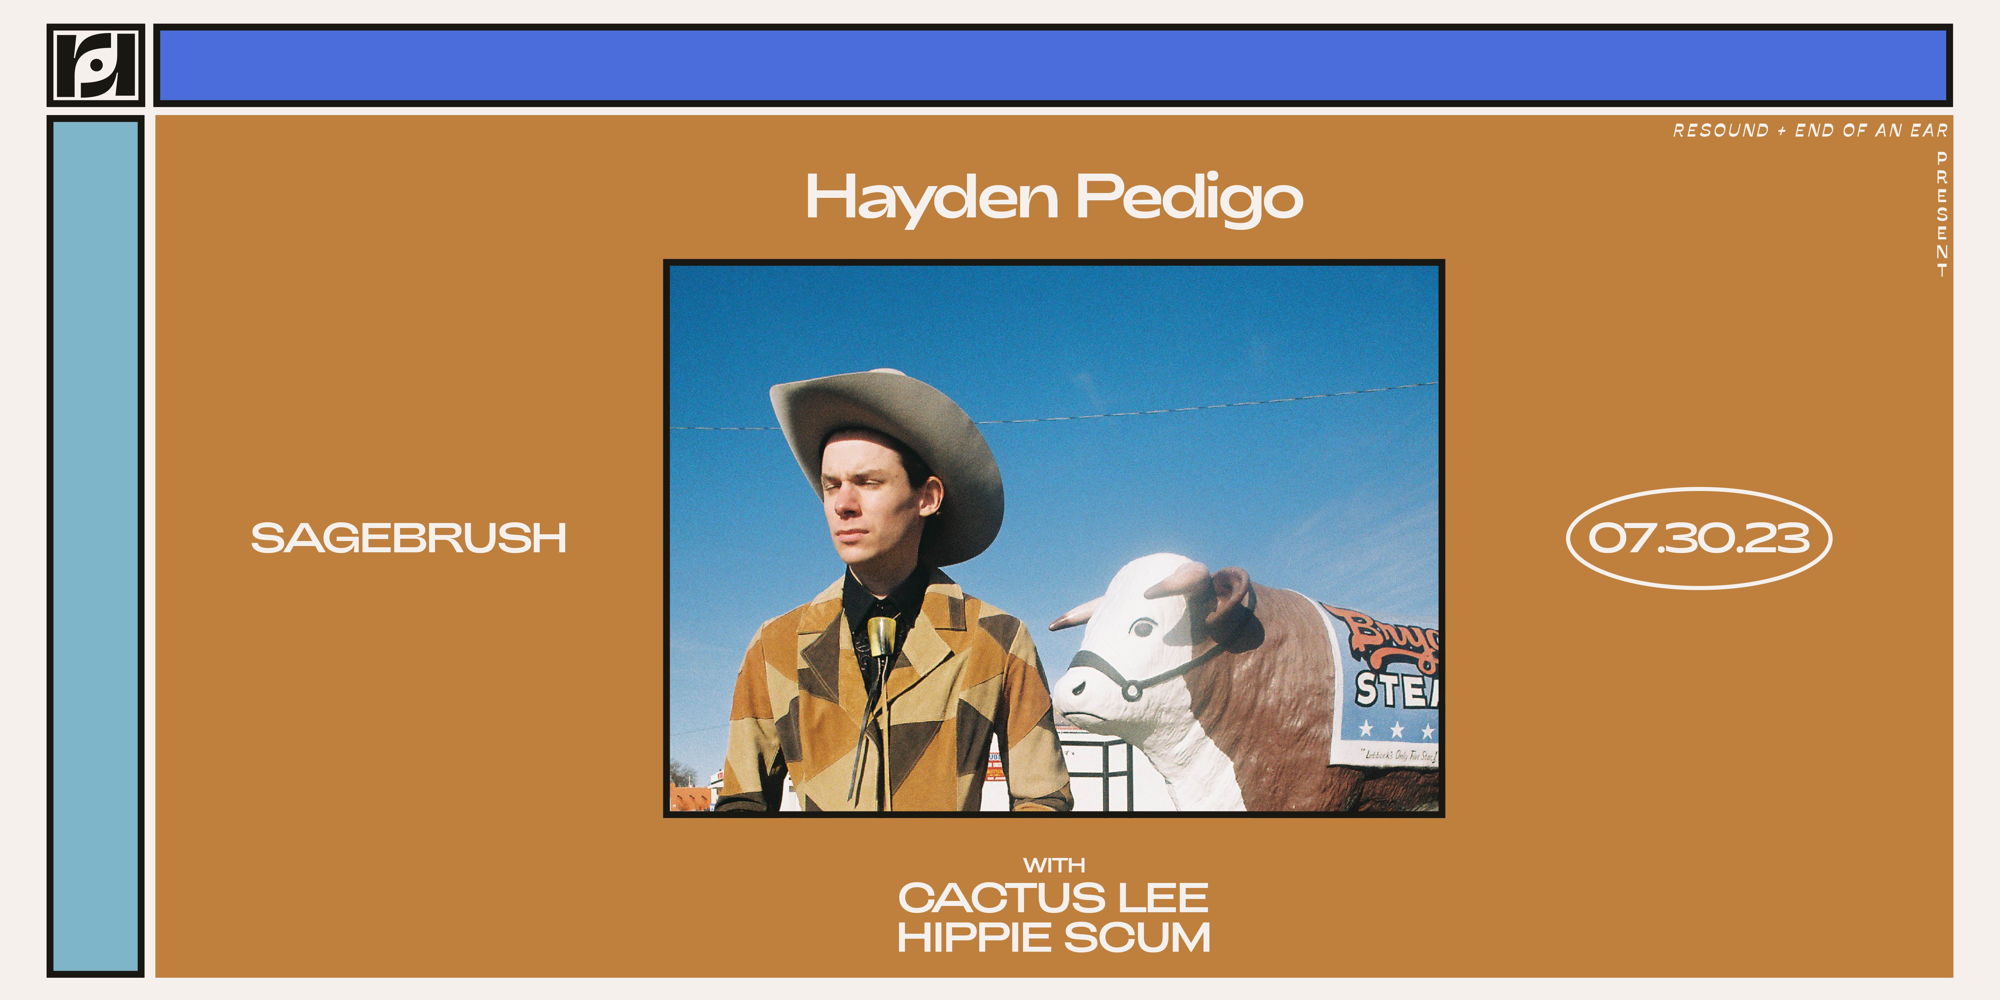 Resound & End Of An Ear Present: Hayden Pedigo W/ Cactus Lee And Hippie Scum On 7/30! promotional image